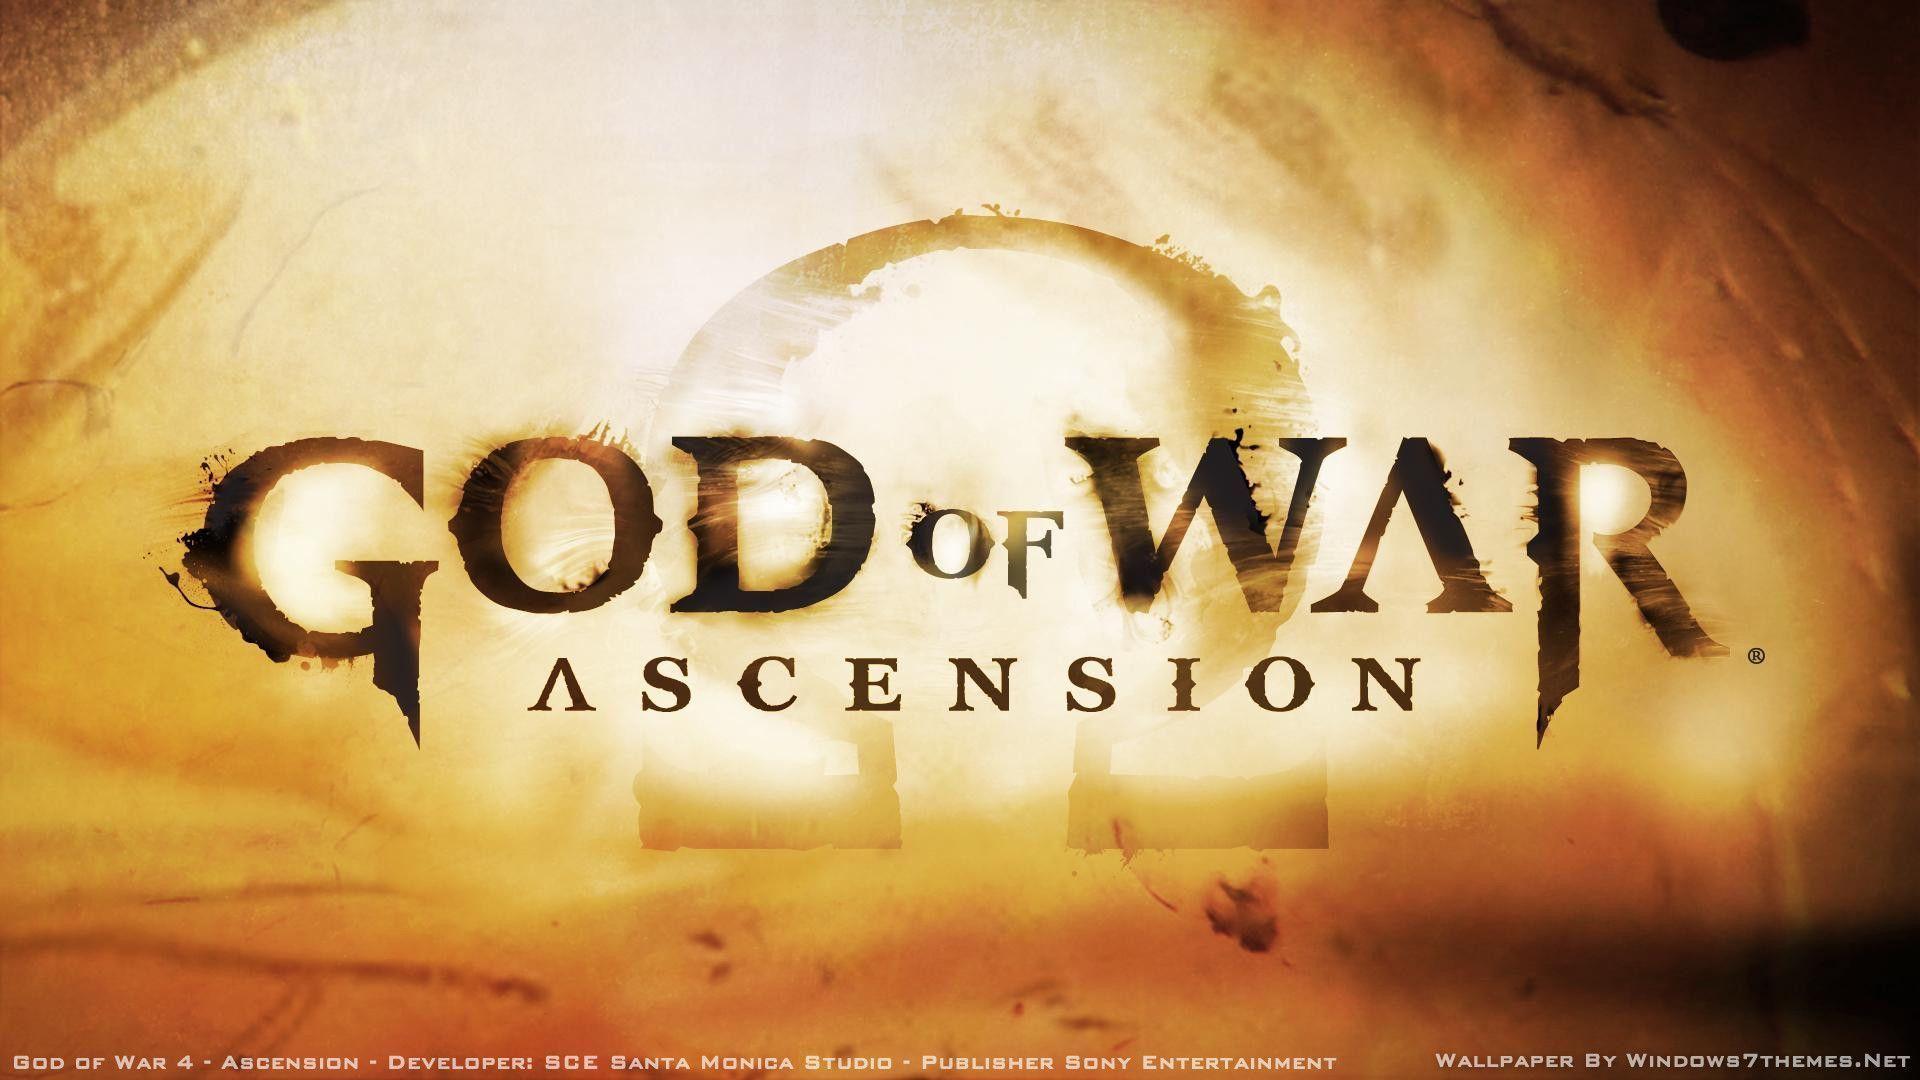 Awesome God of War 4 Ascension Wallpaper